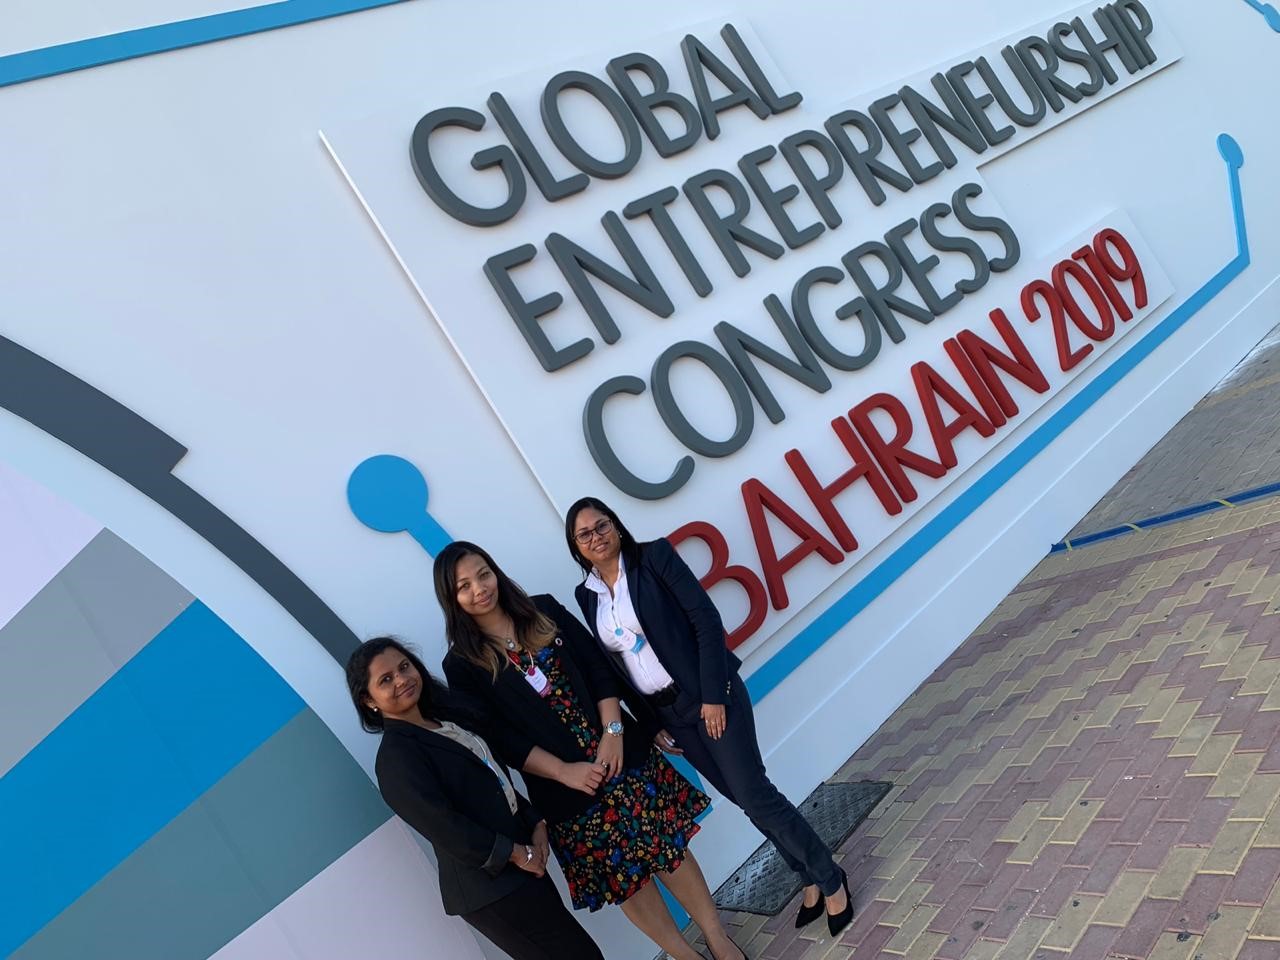 ESA Attends the Global Entrepreneurship Congress